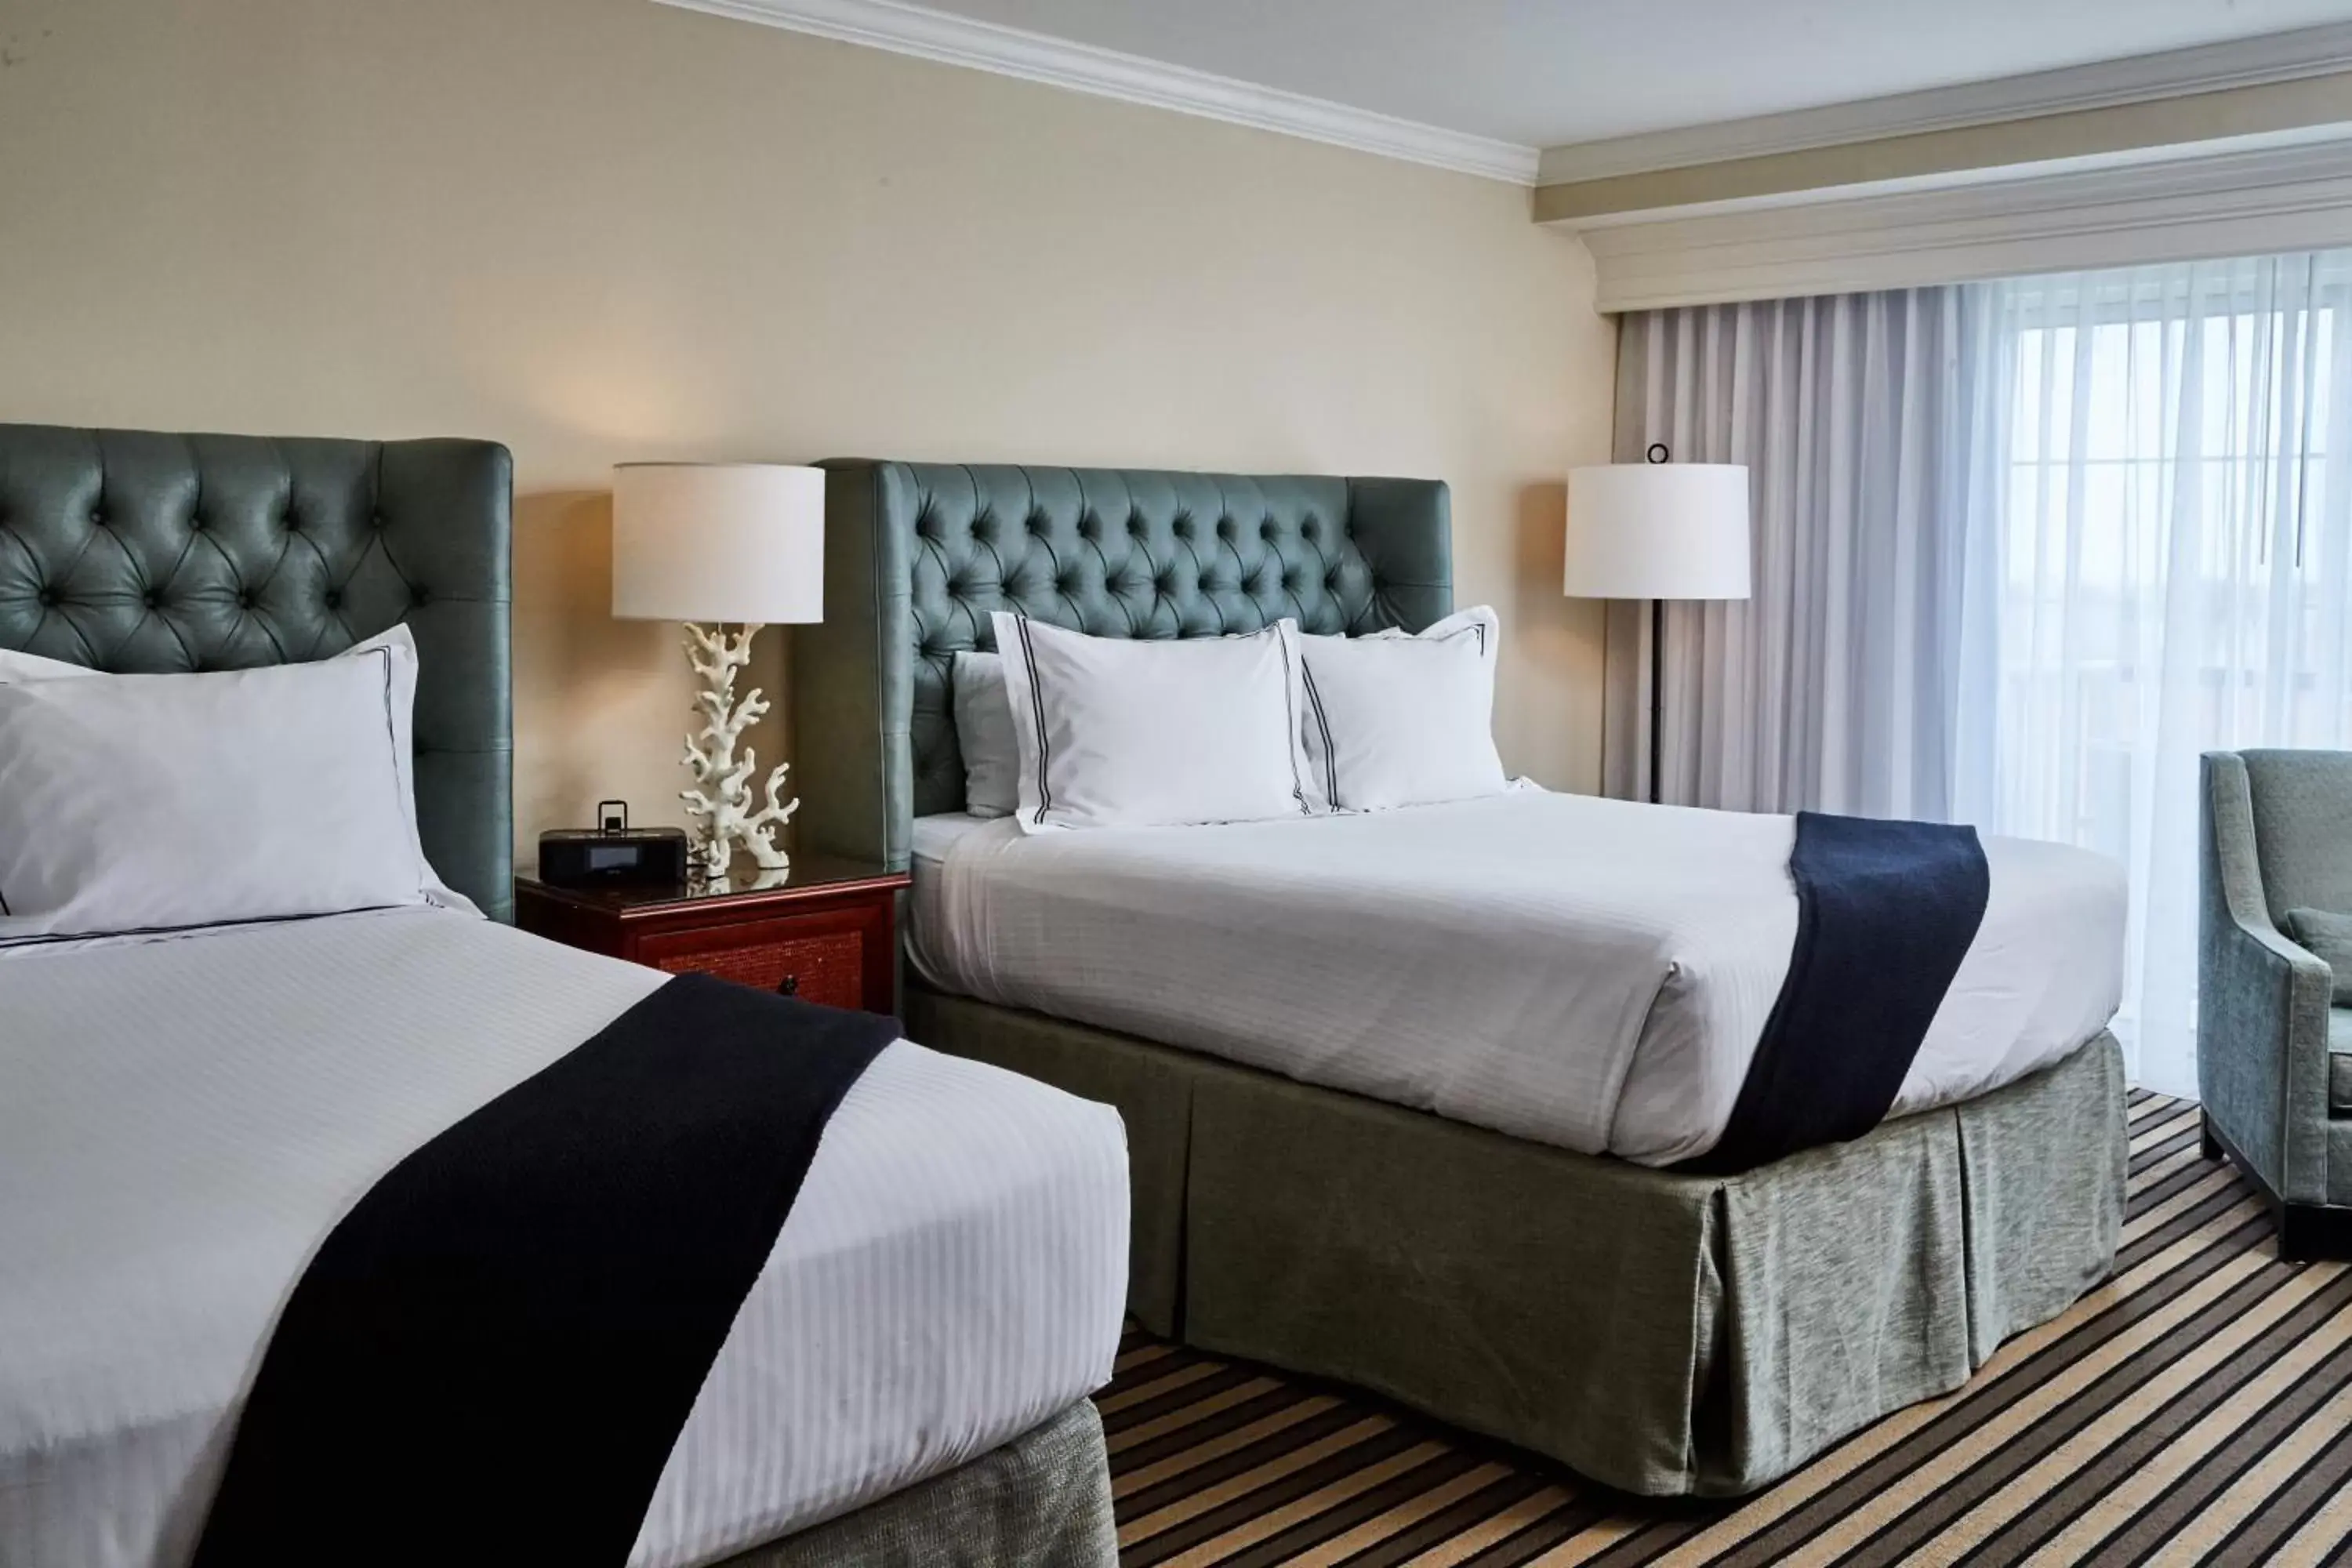 Queen Room with Two Queen Beds in Wild Dunes Resort - Sweetgrass Inn and Boardwalk Inn